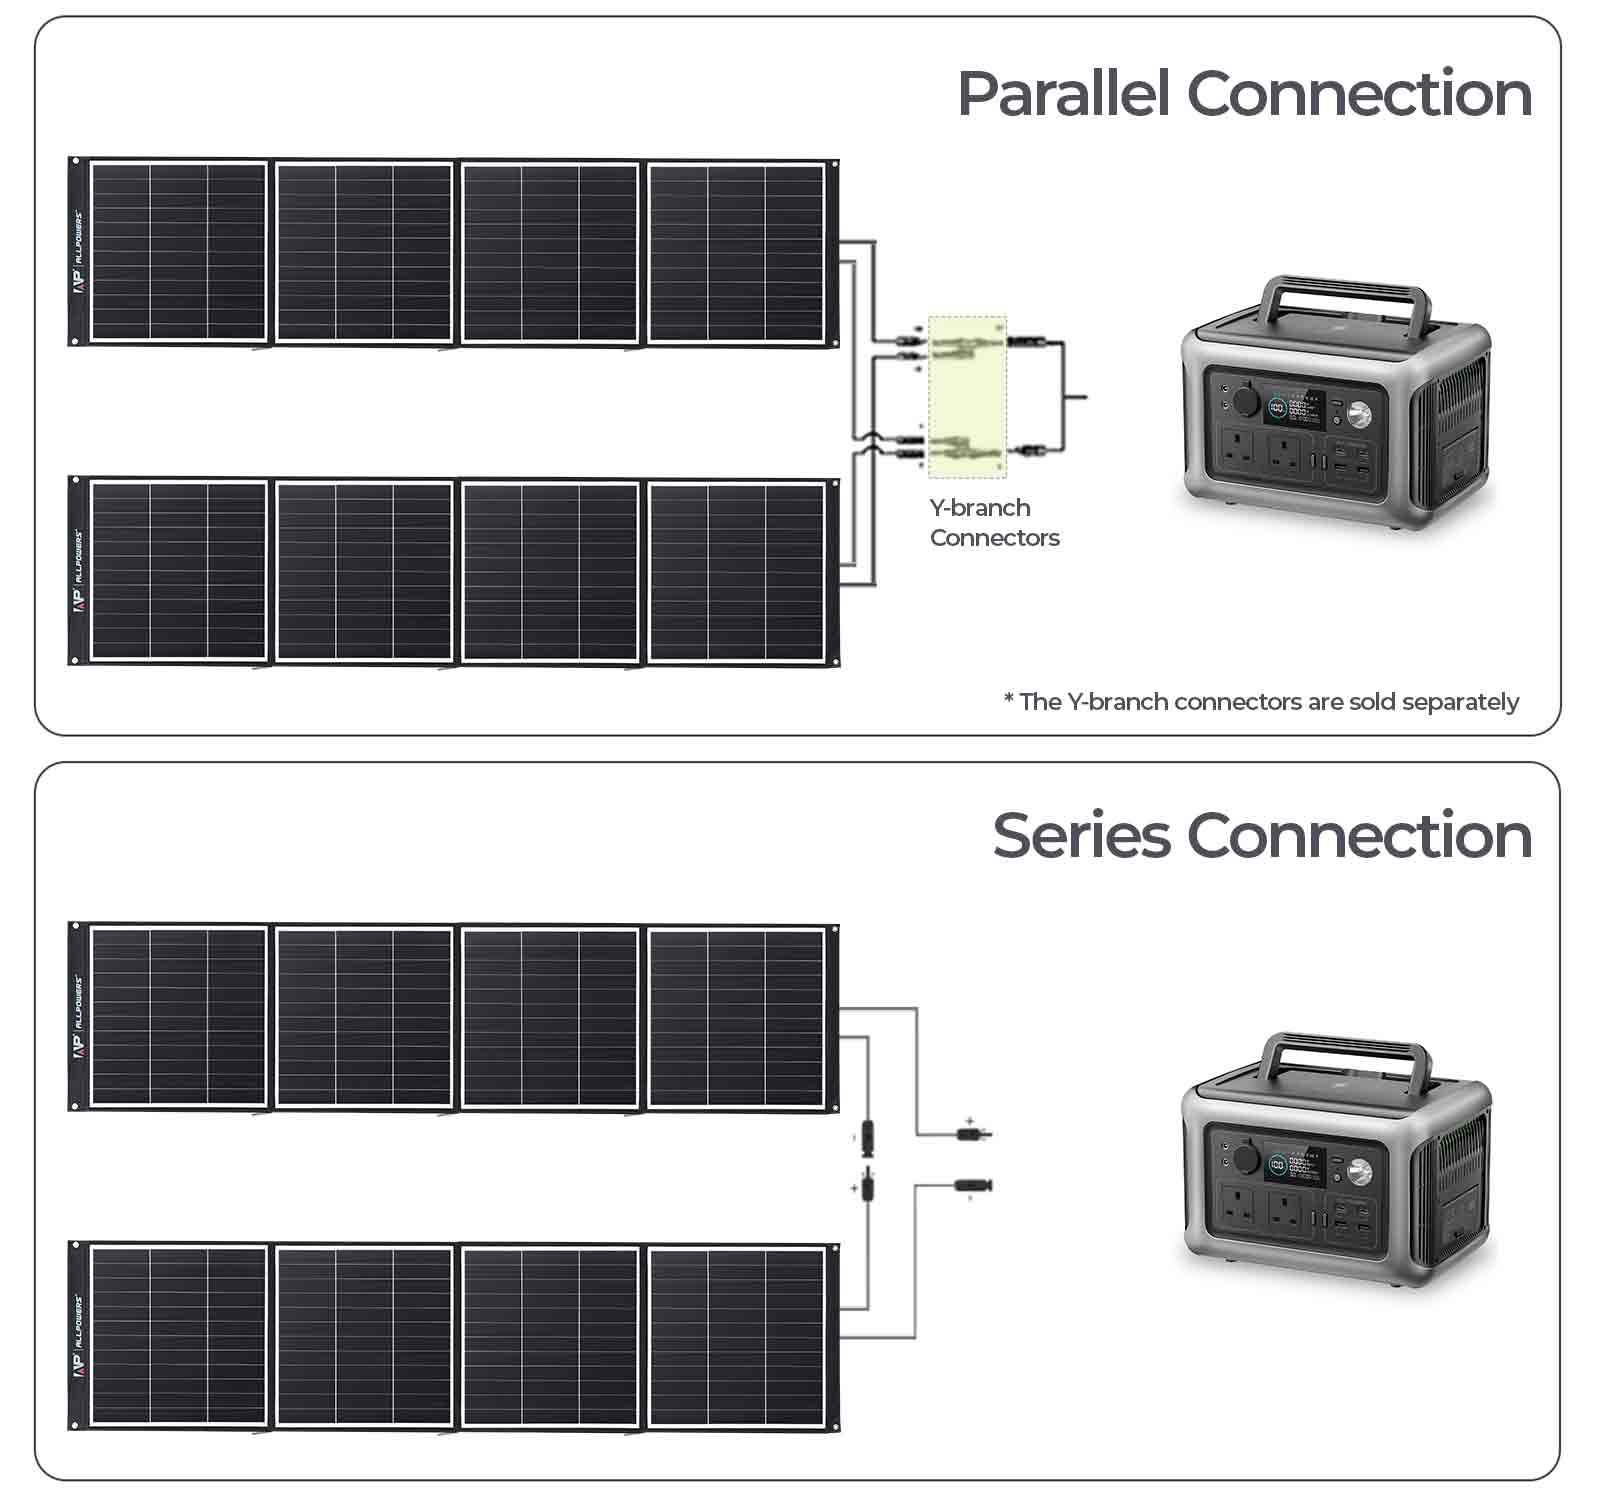 sp035-panel-parallel-connection-1600-EN.jpg